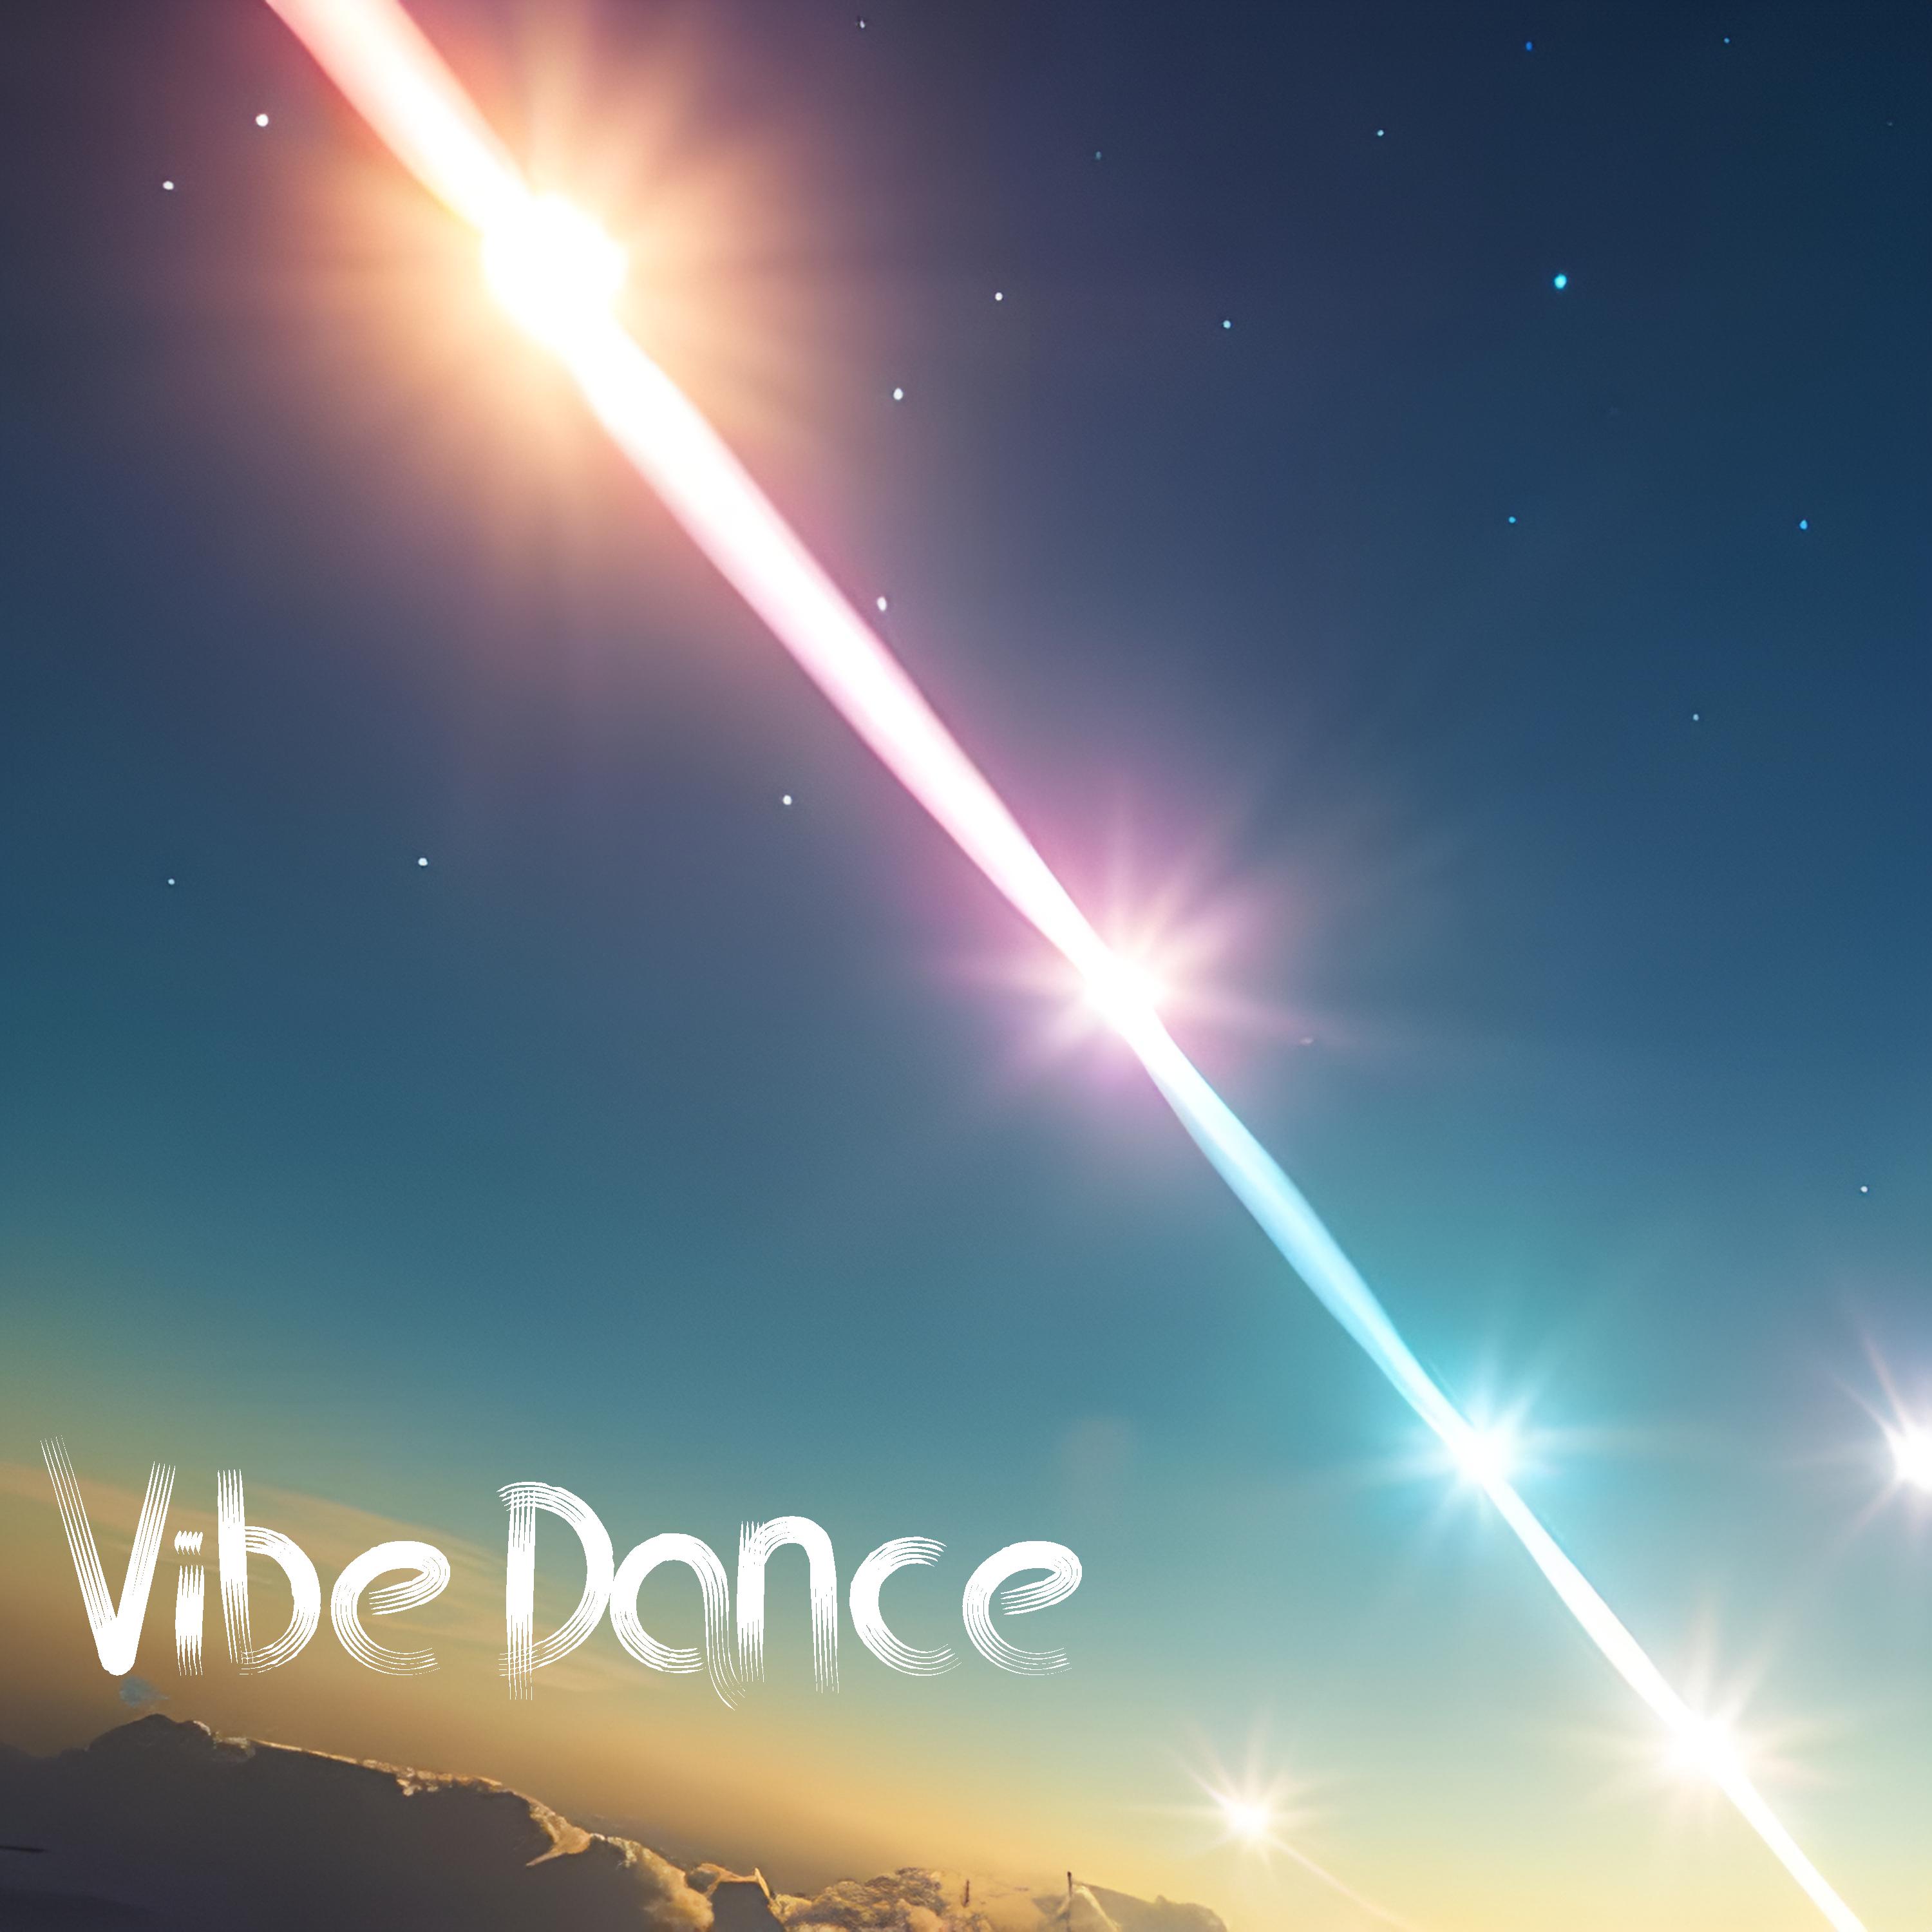 Vibe dance